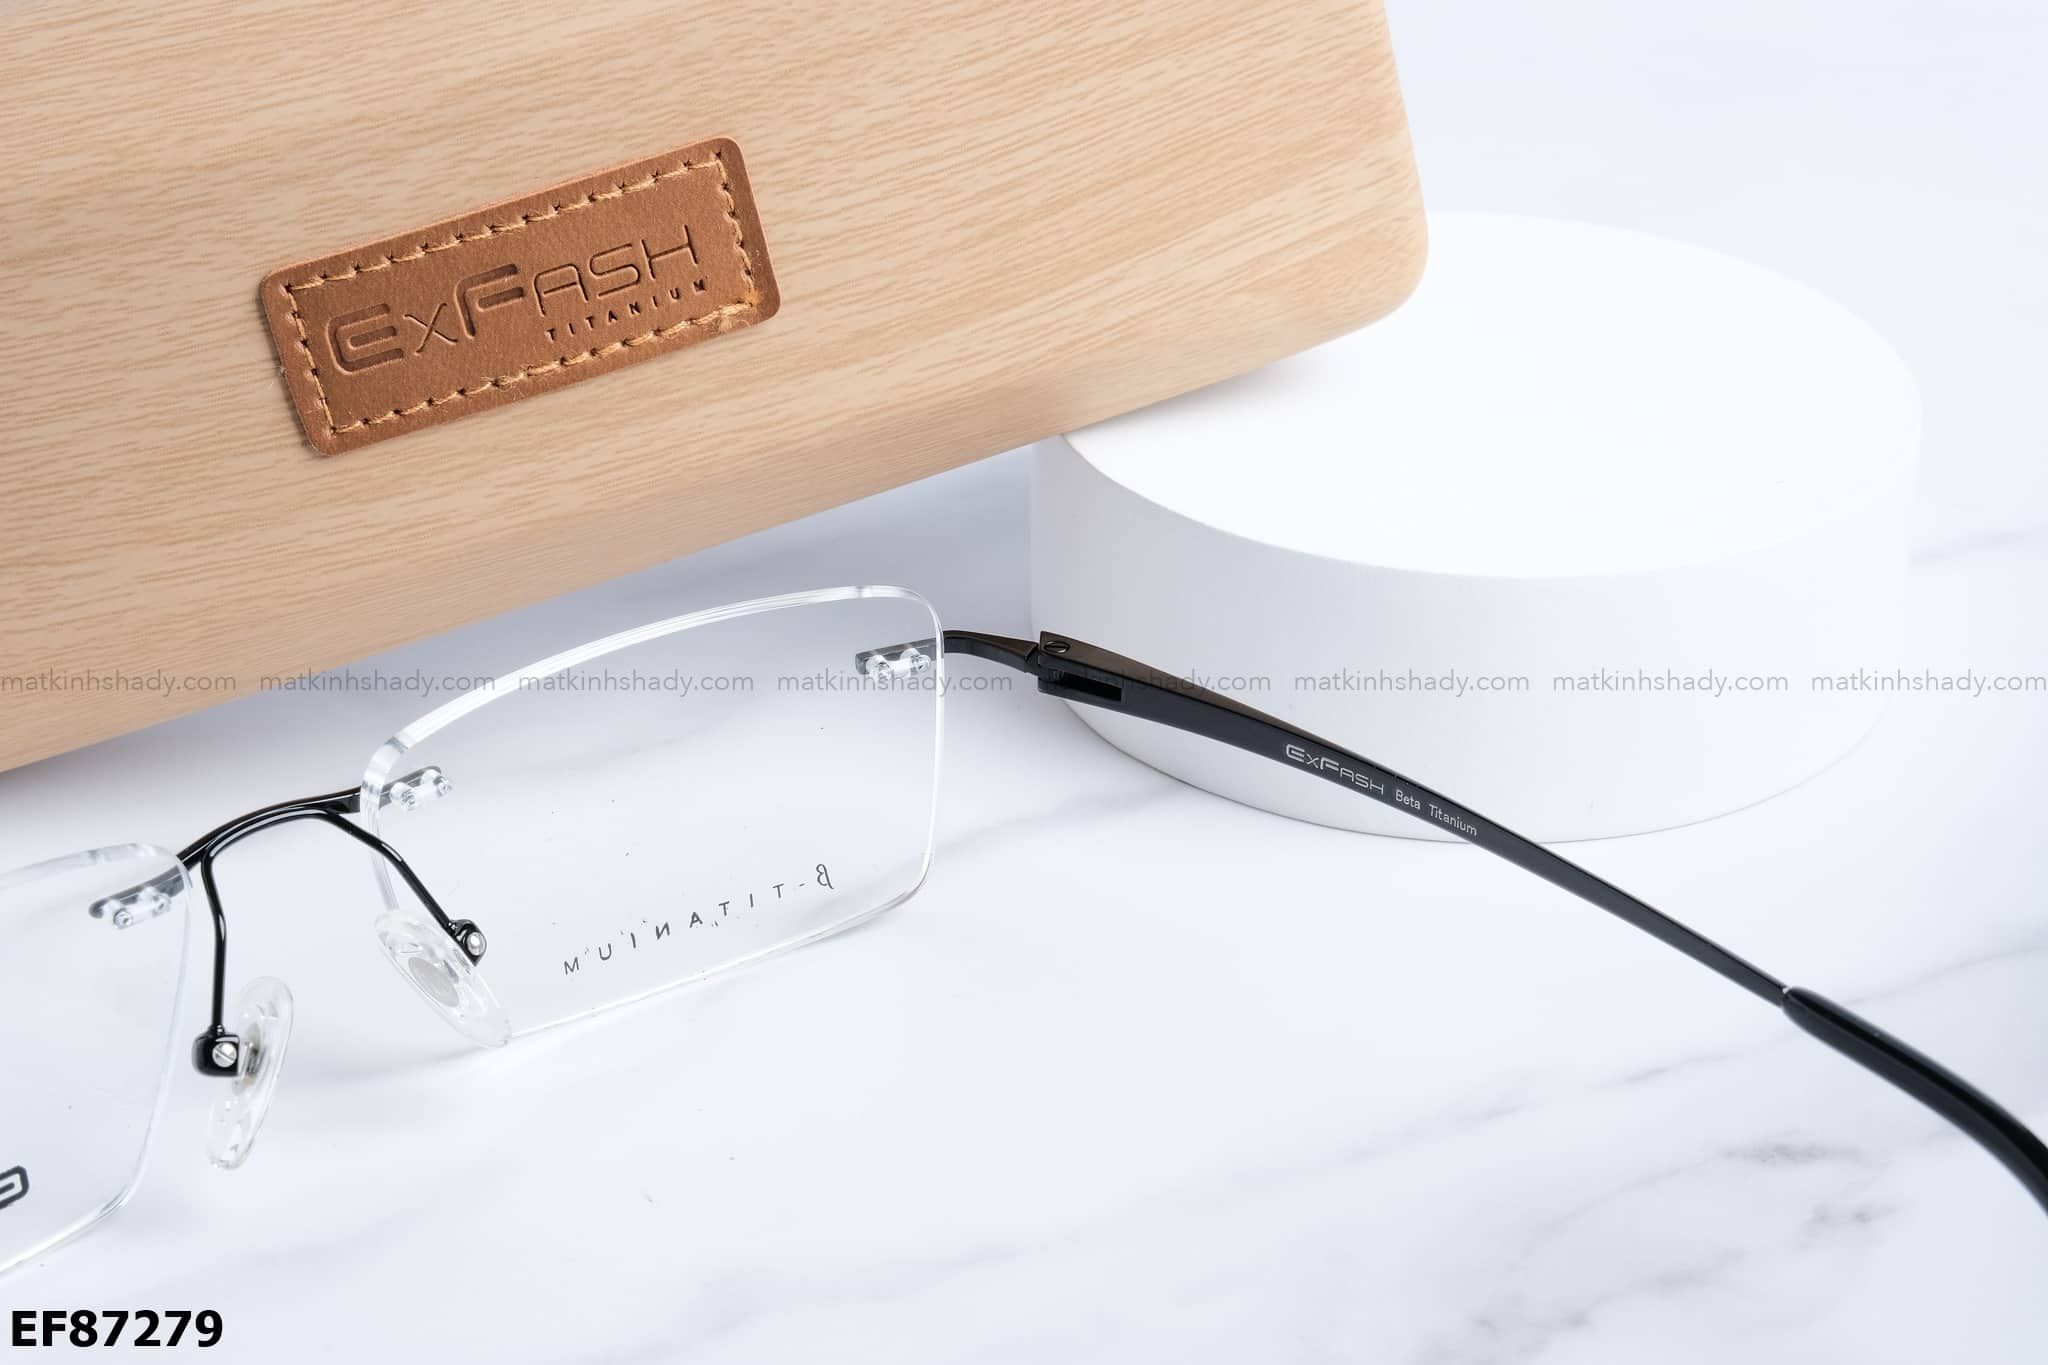  Exfash Eyewear - Glasses - EF87279 